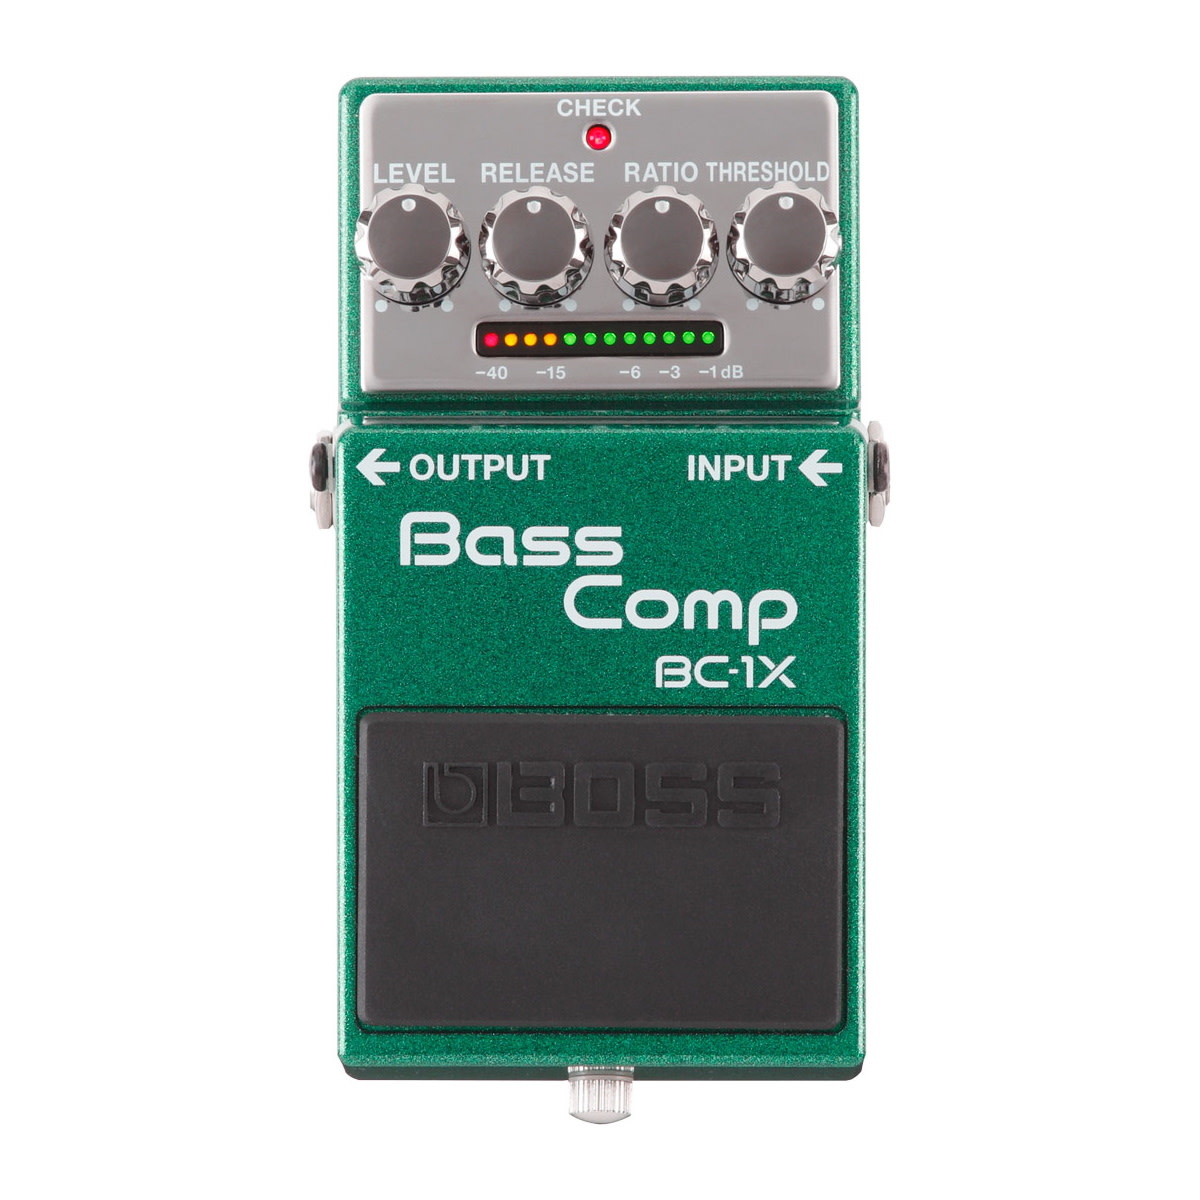 NEW Boss BC-1X Bass Compressor